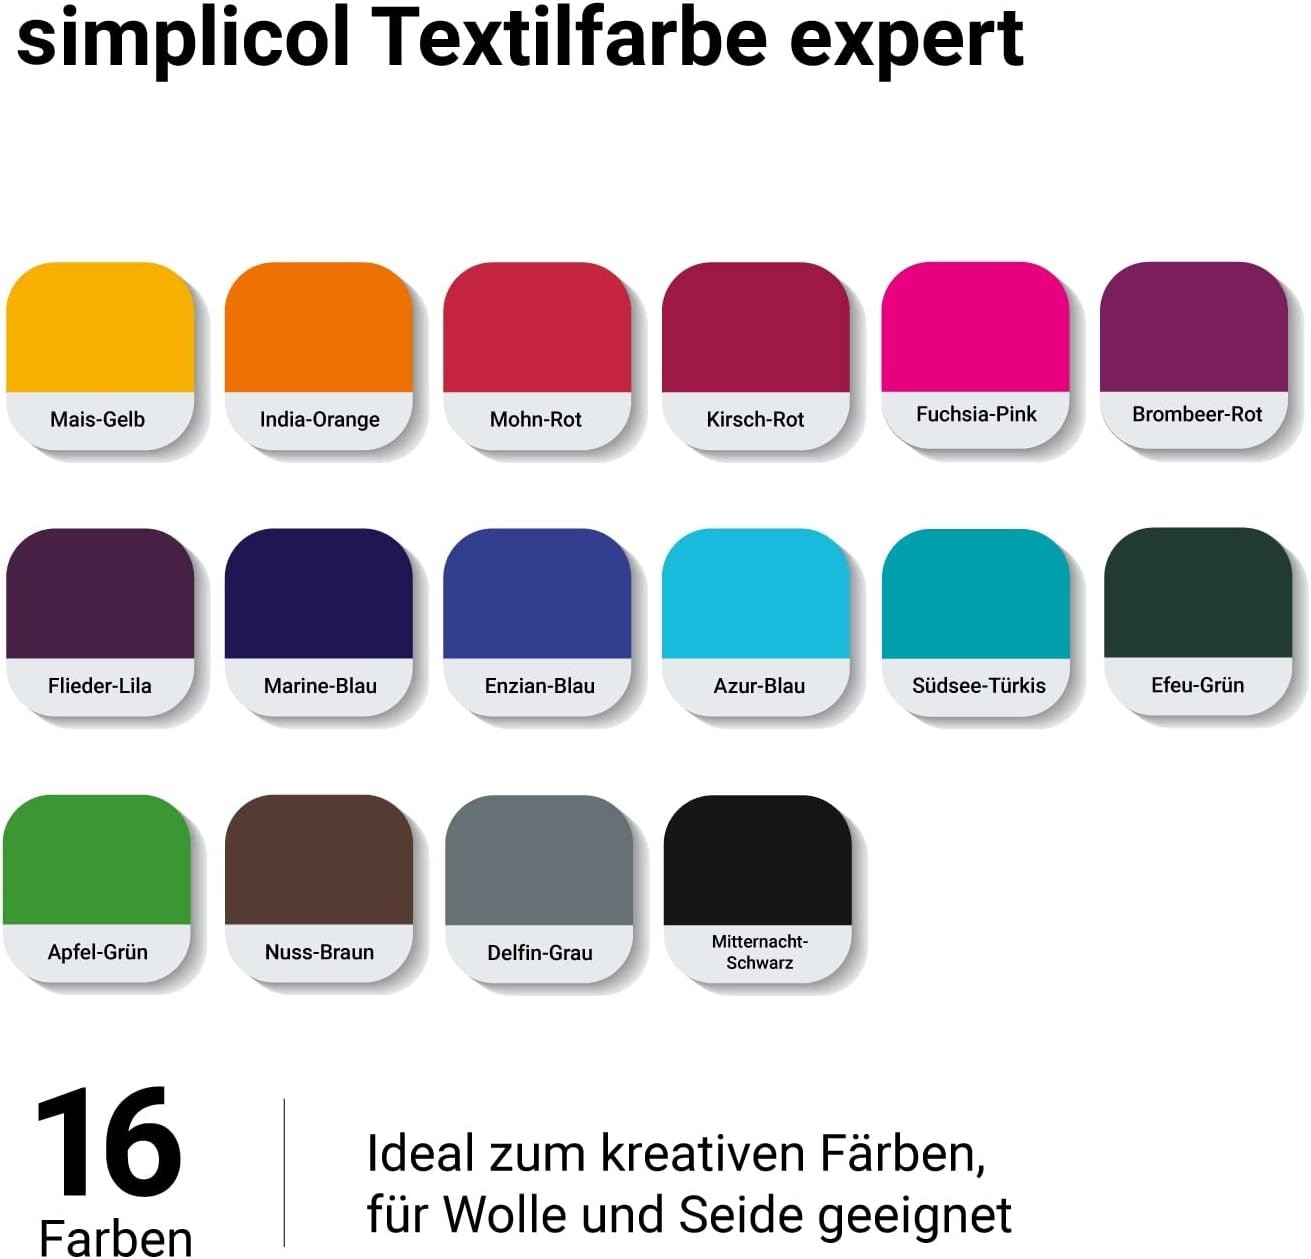 simplicol Textilfarbe expert Mais-Gelb 1701